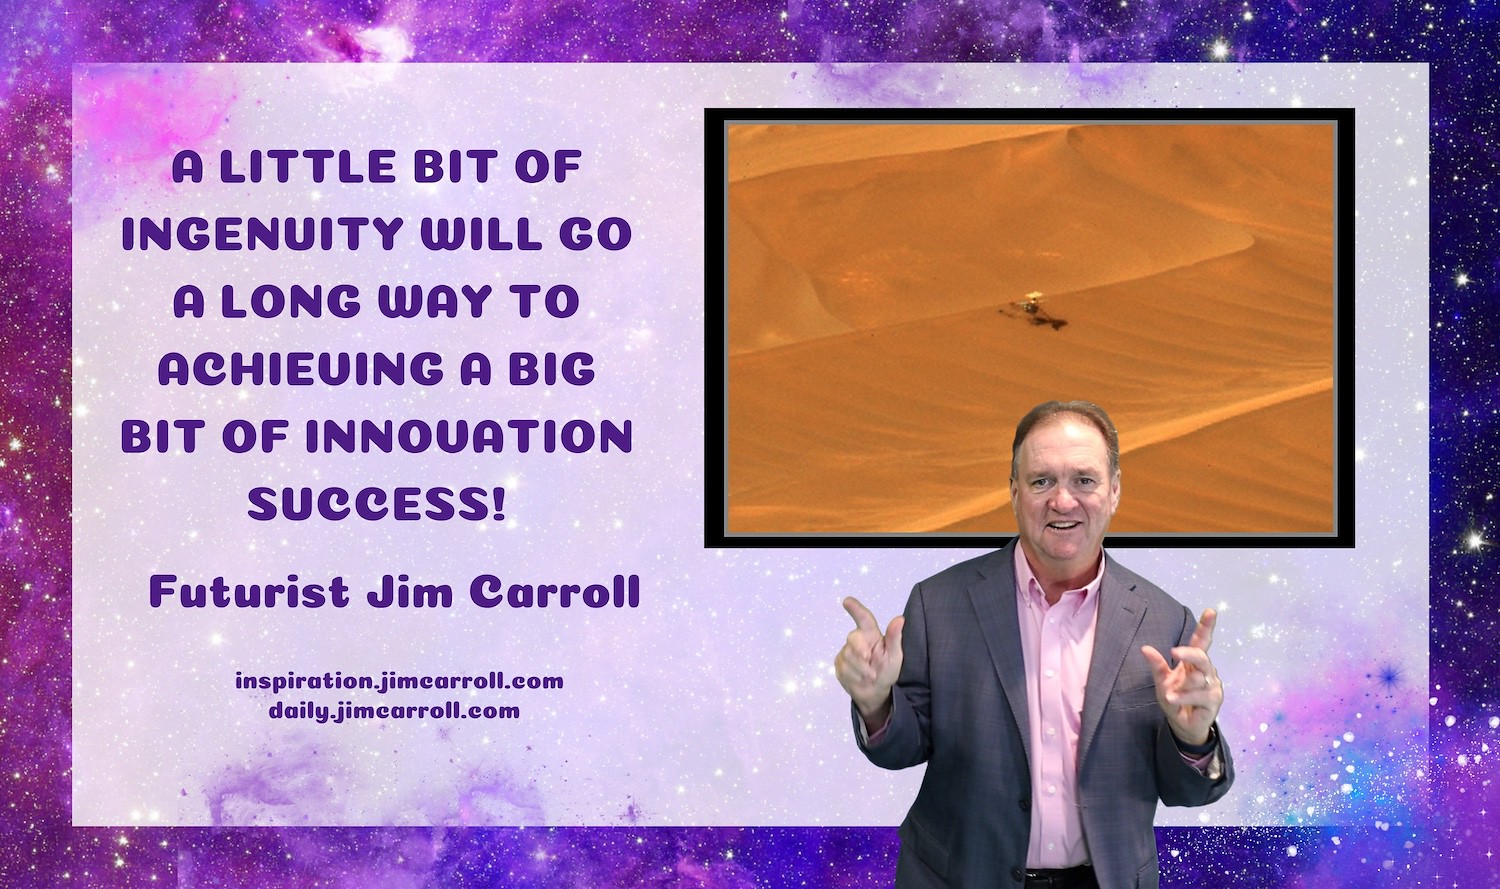 "A little bit of ingenuity will go a long way to achieving a big bit of innovation success!" - Futurist Jim Carroll